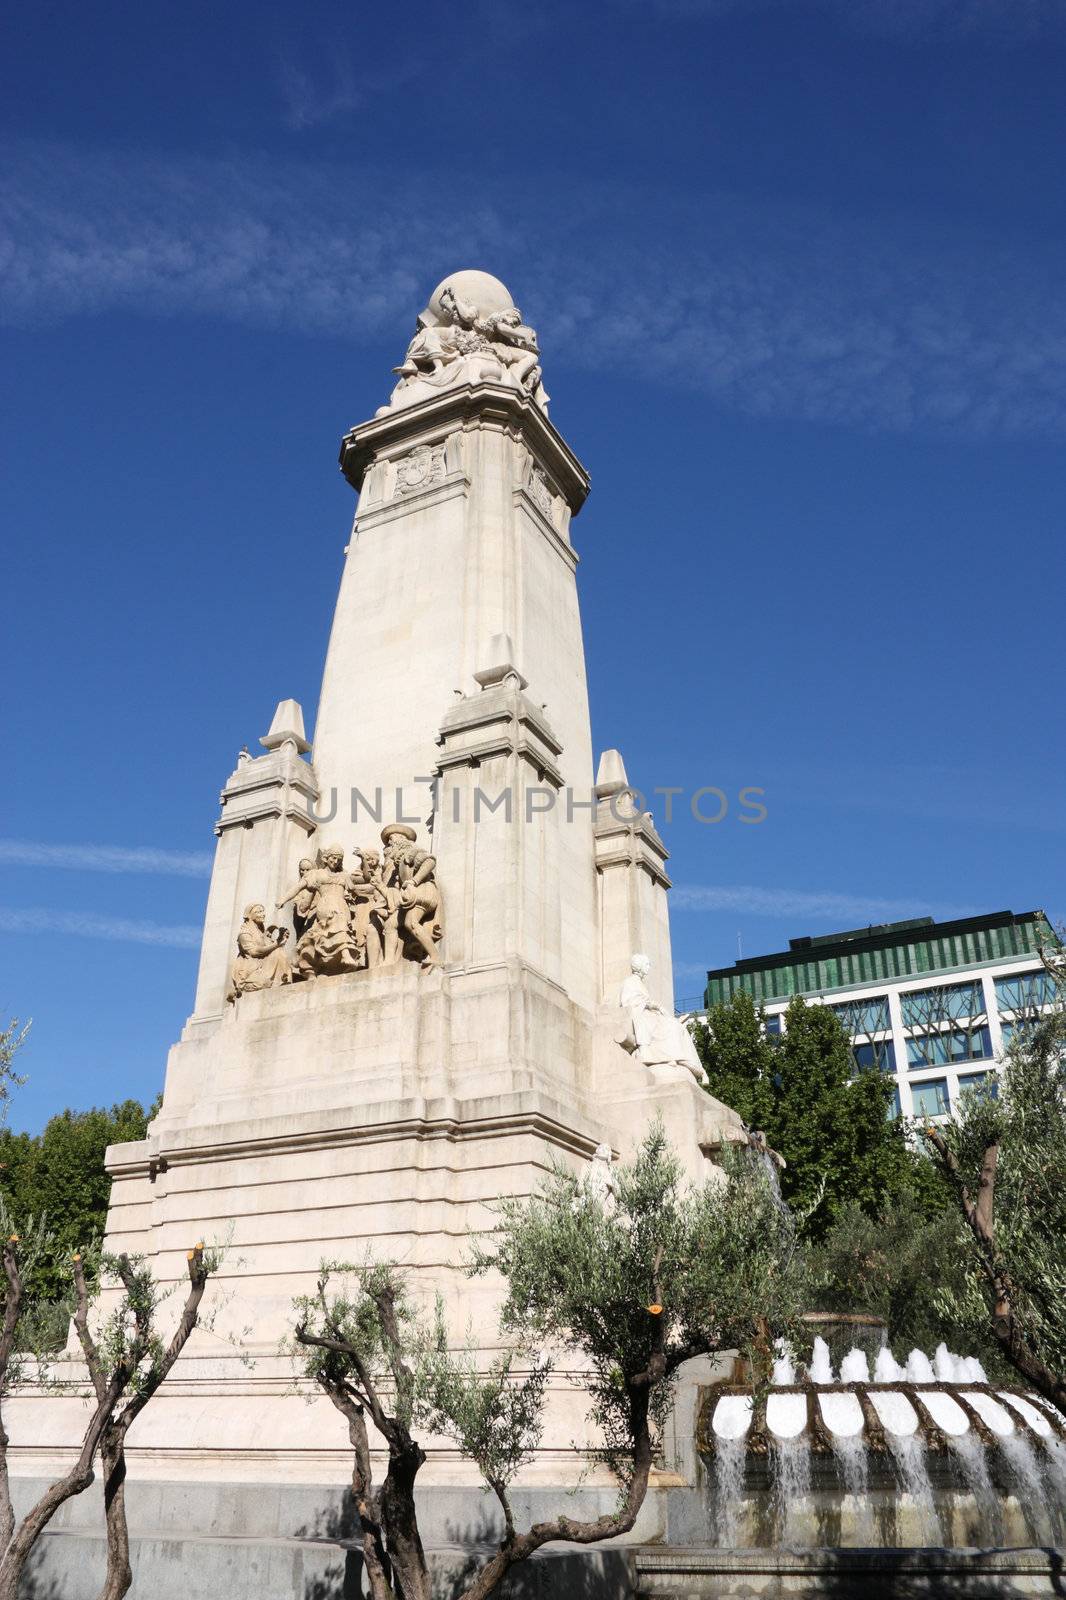 Madrid - fountain and Cervantes Monument at Plaza Espana